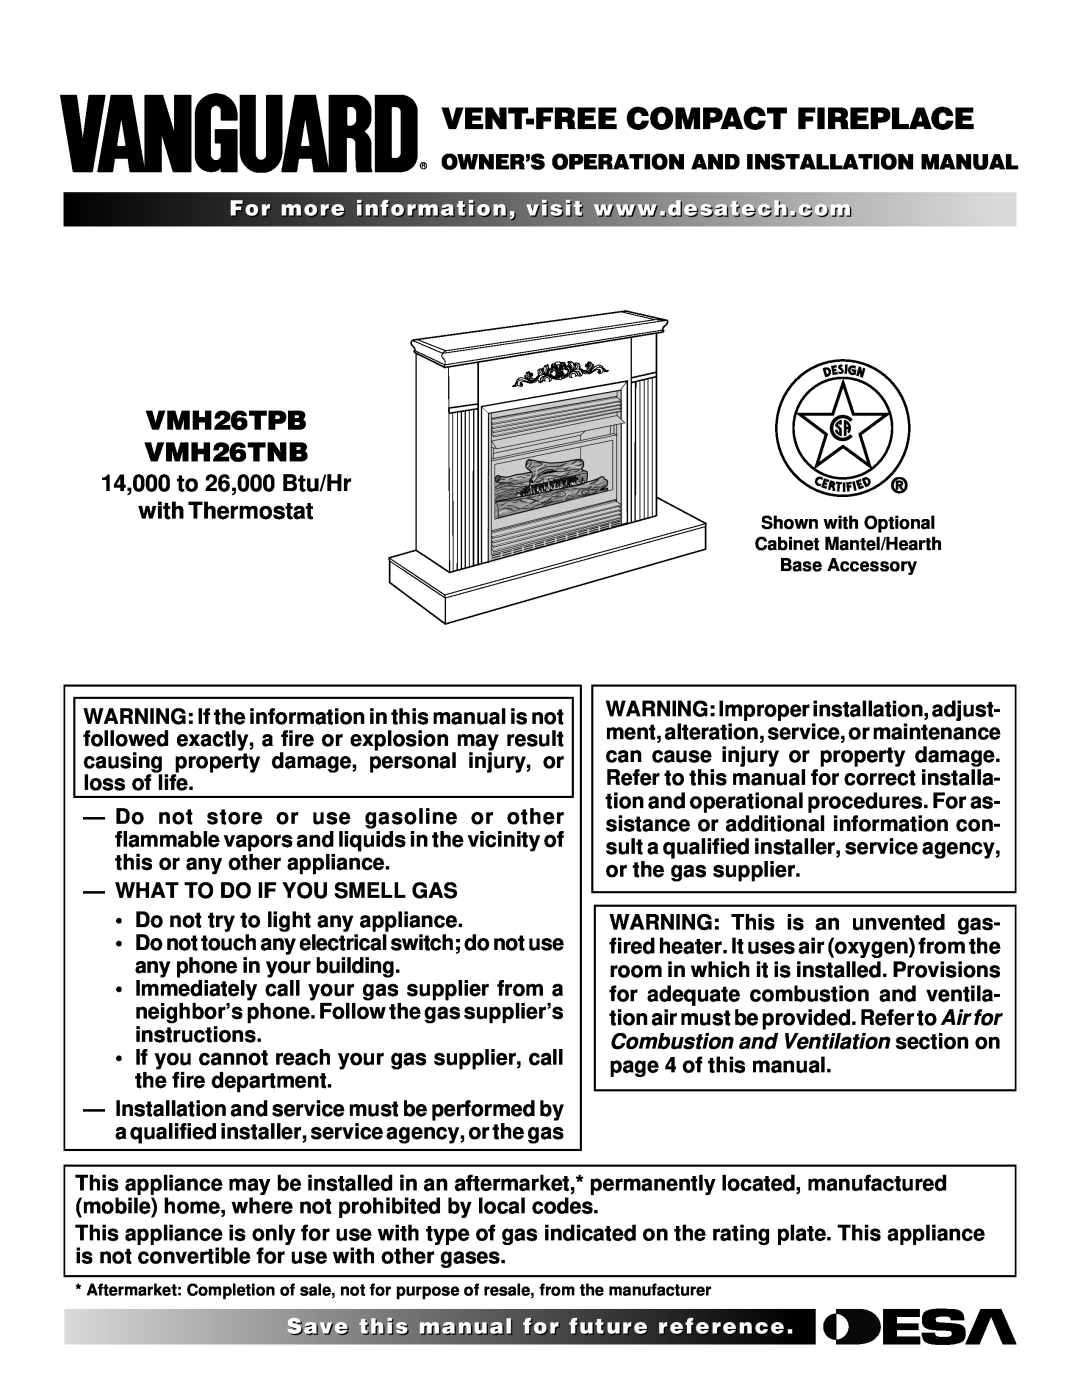 Vanguard Heating WMH26TNB installation manual Save thisfor, Vent-Freecompact Fireplace, VMH26TPB VMH26TNB 